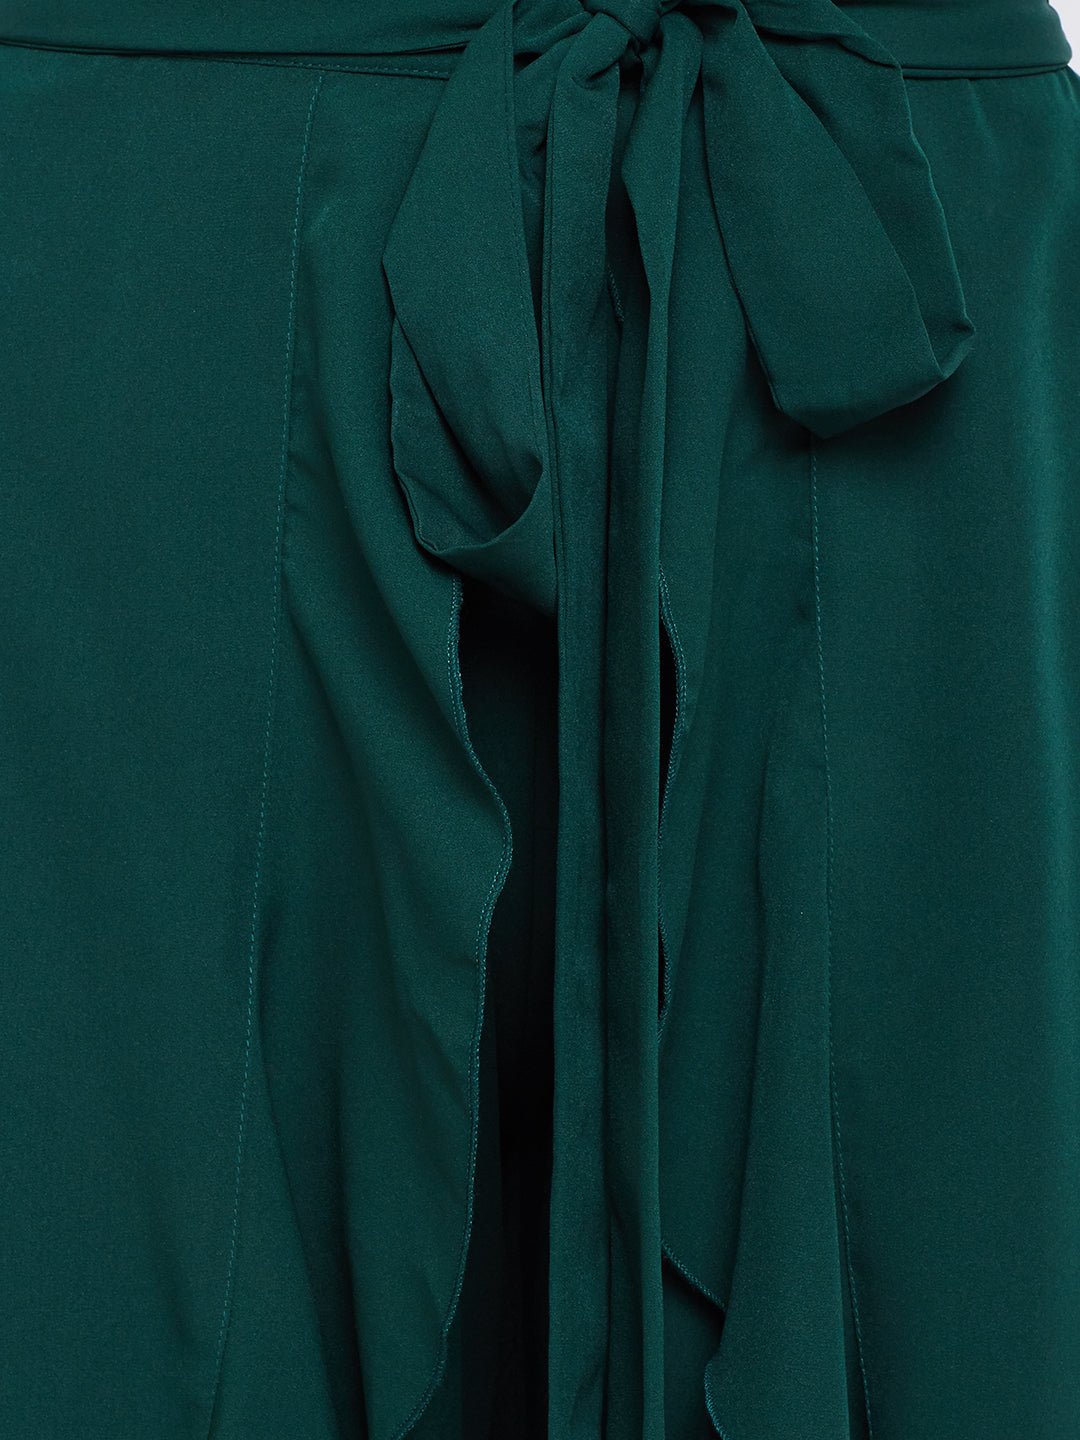 Folk Republic Women Solid Green Waist Tie-Up Ruffled Maxi Skirt with Attached Trousers - #folk republic#